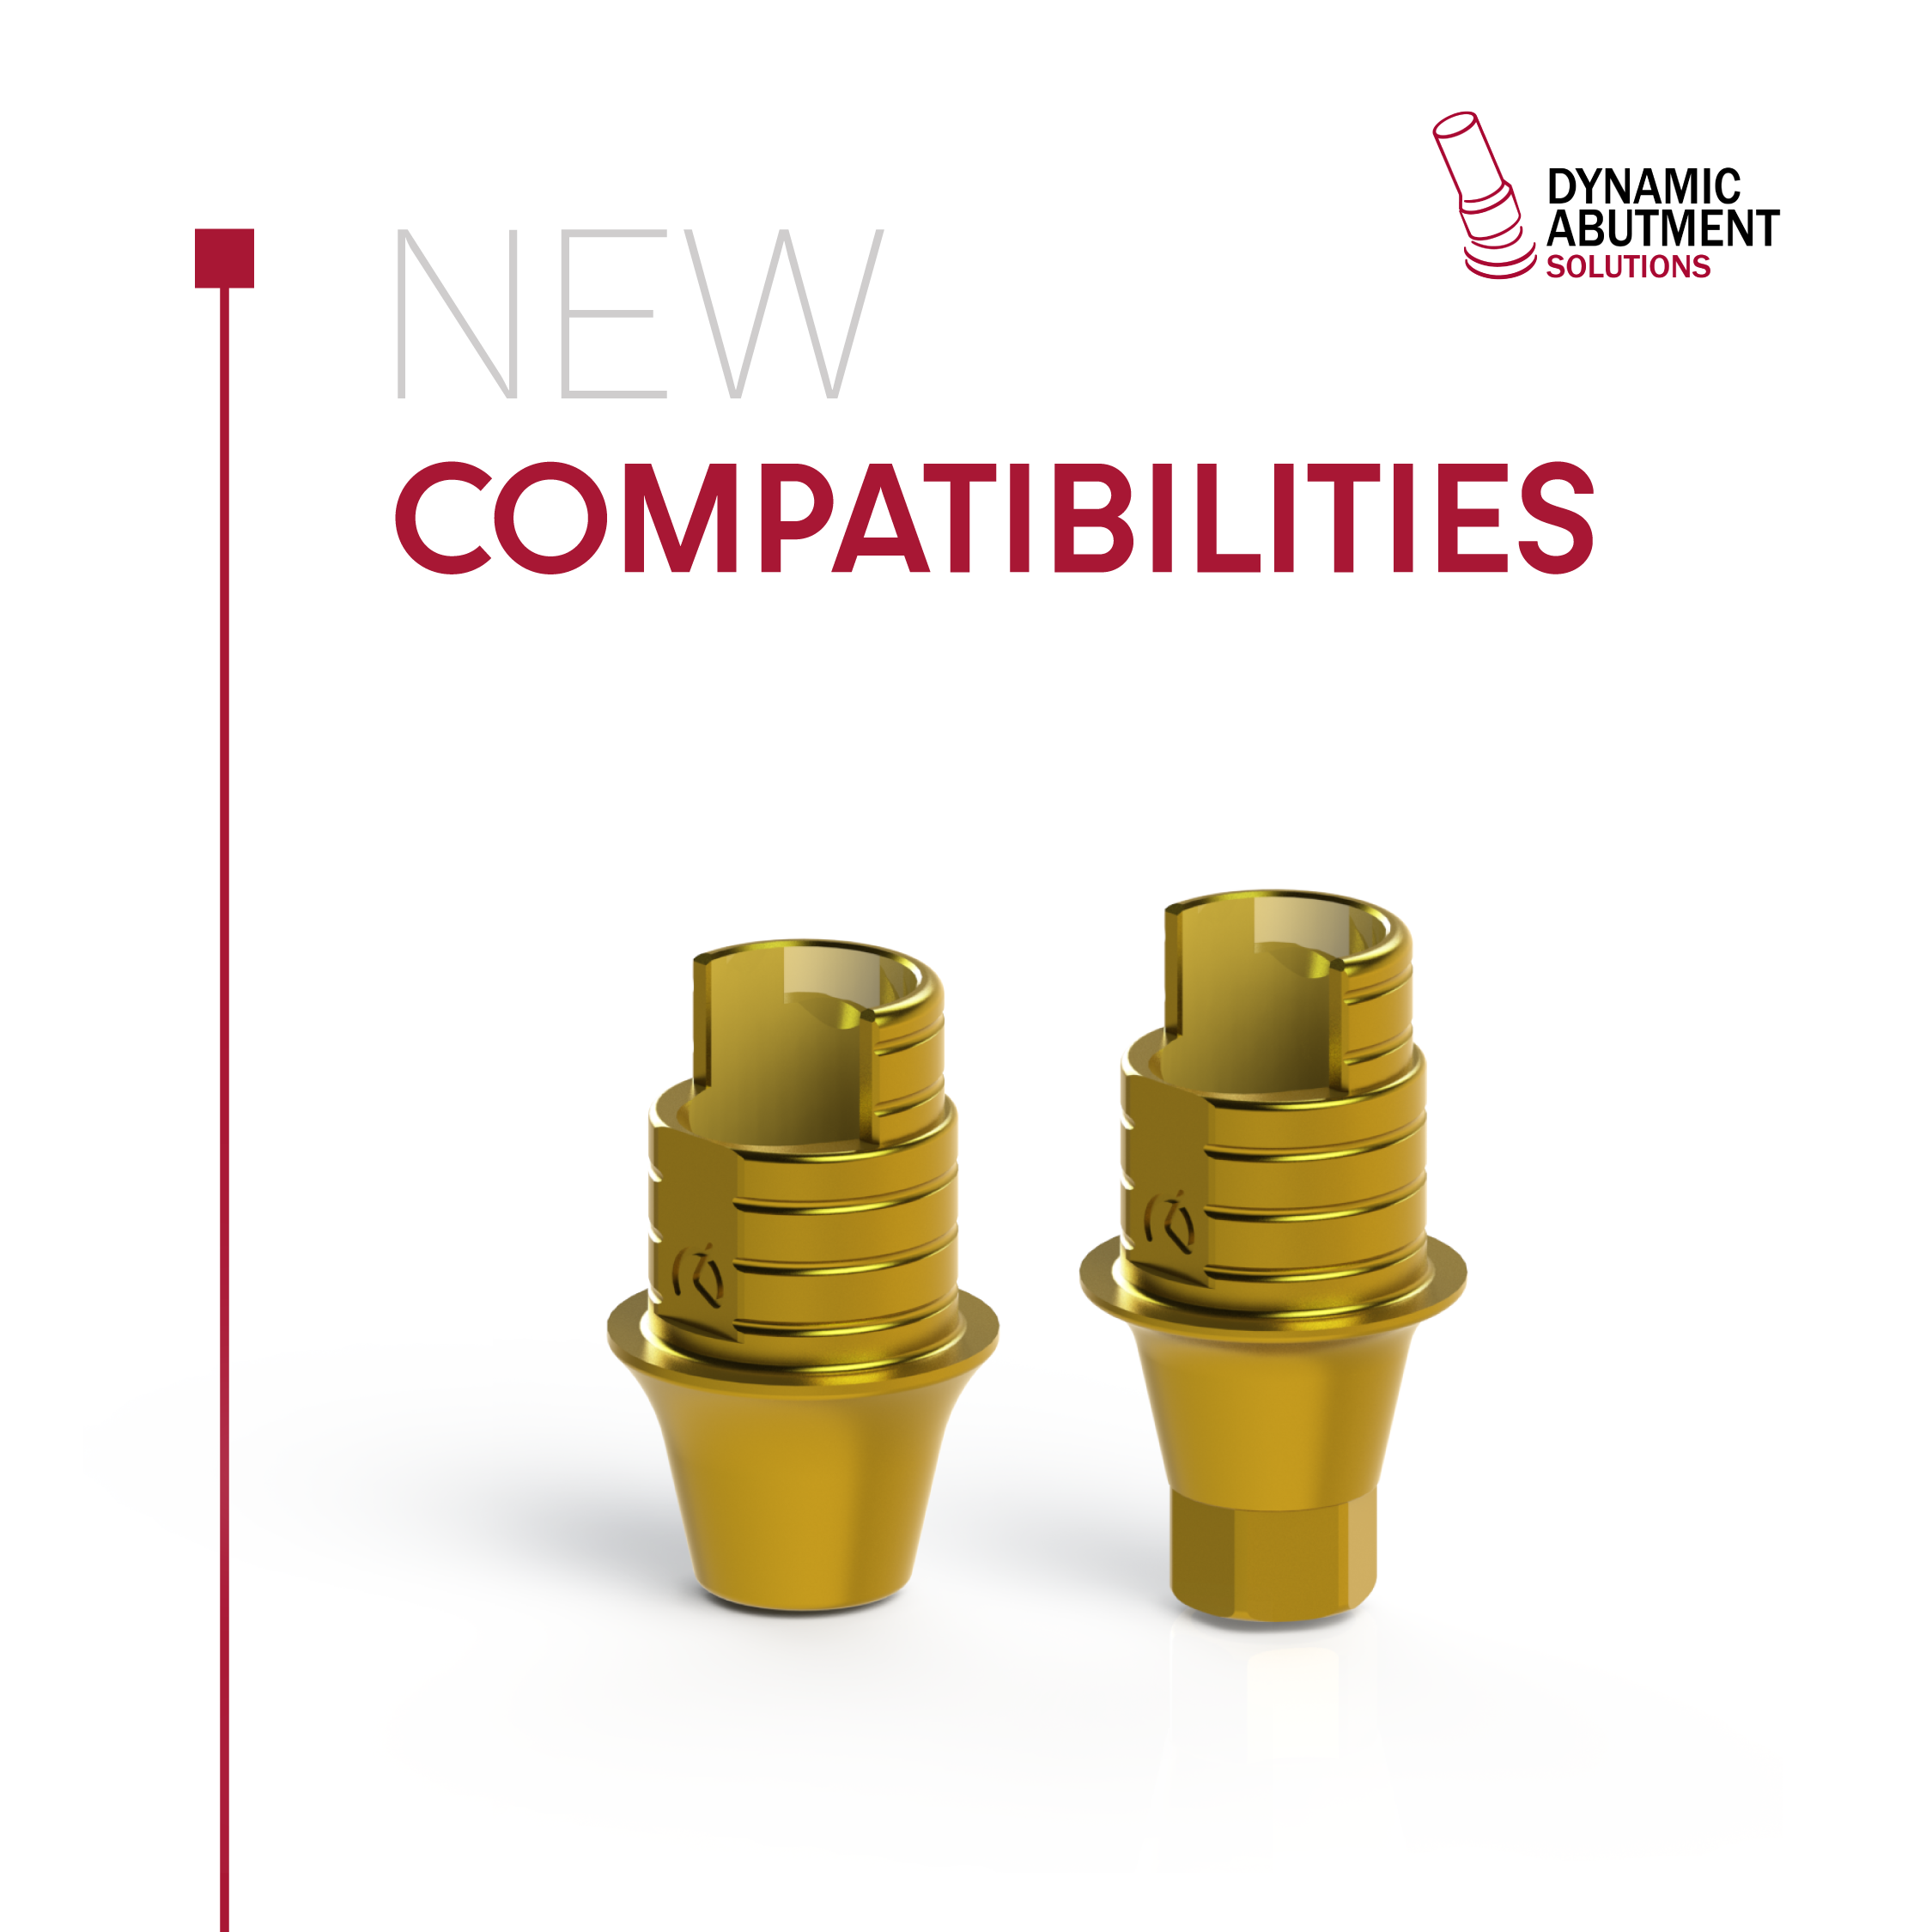 Featured image for “Nuevas compatibilidades”